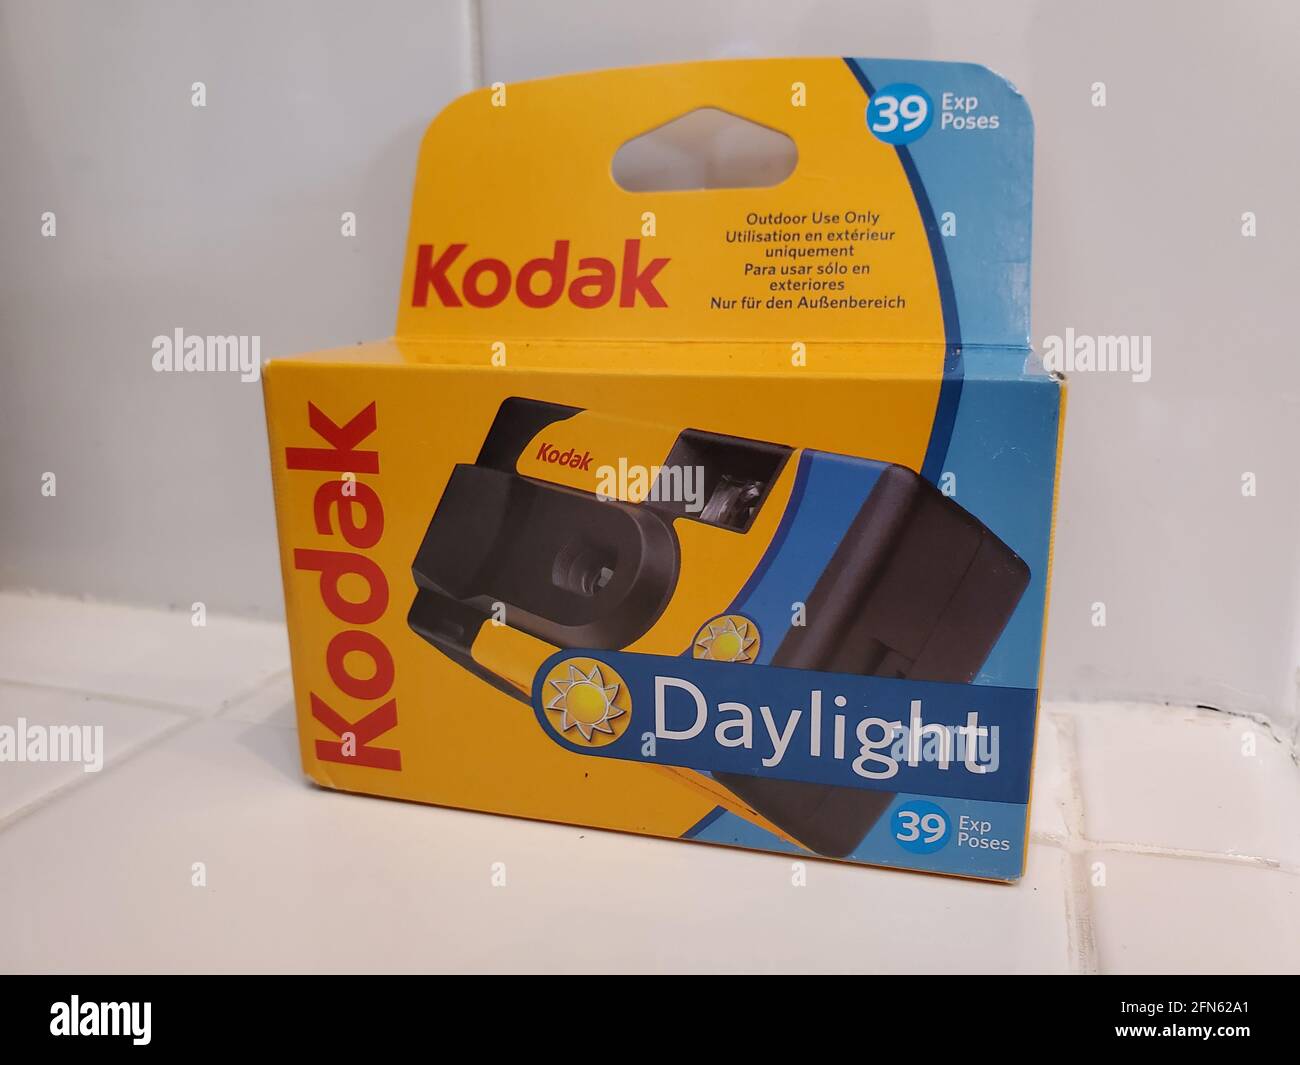 Cámara desechable Kodak 35mm Fotografía de stock - Alamy